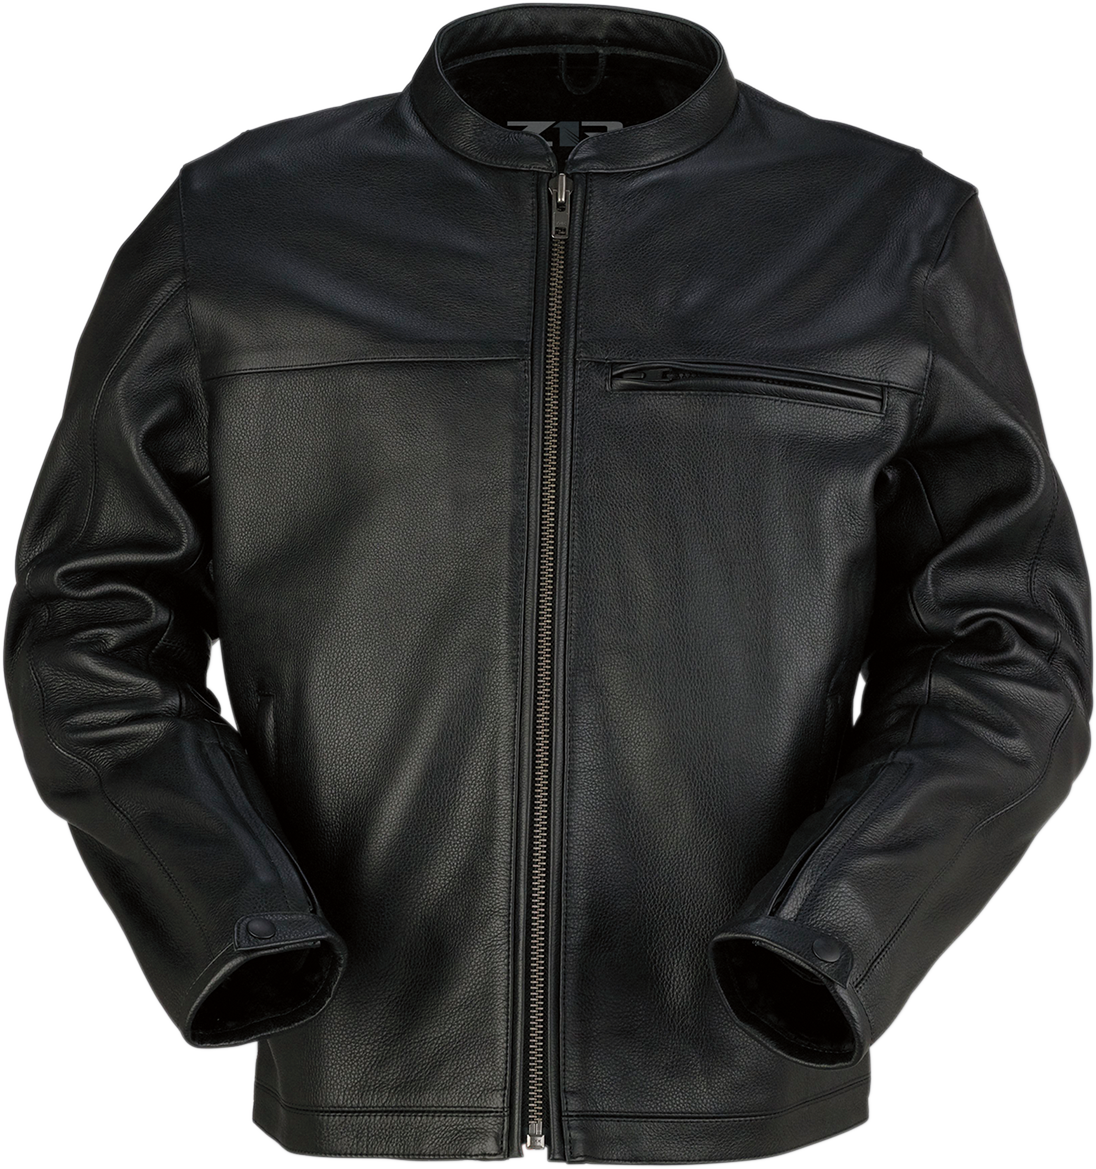 Z1R Munition Leather Jacket - Black - 5X 2810-3488